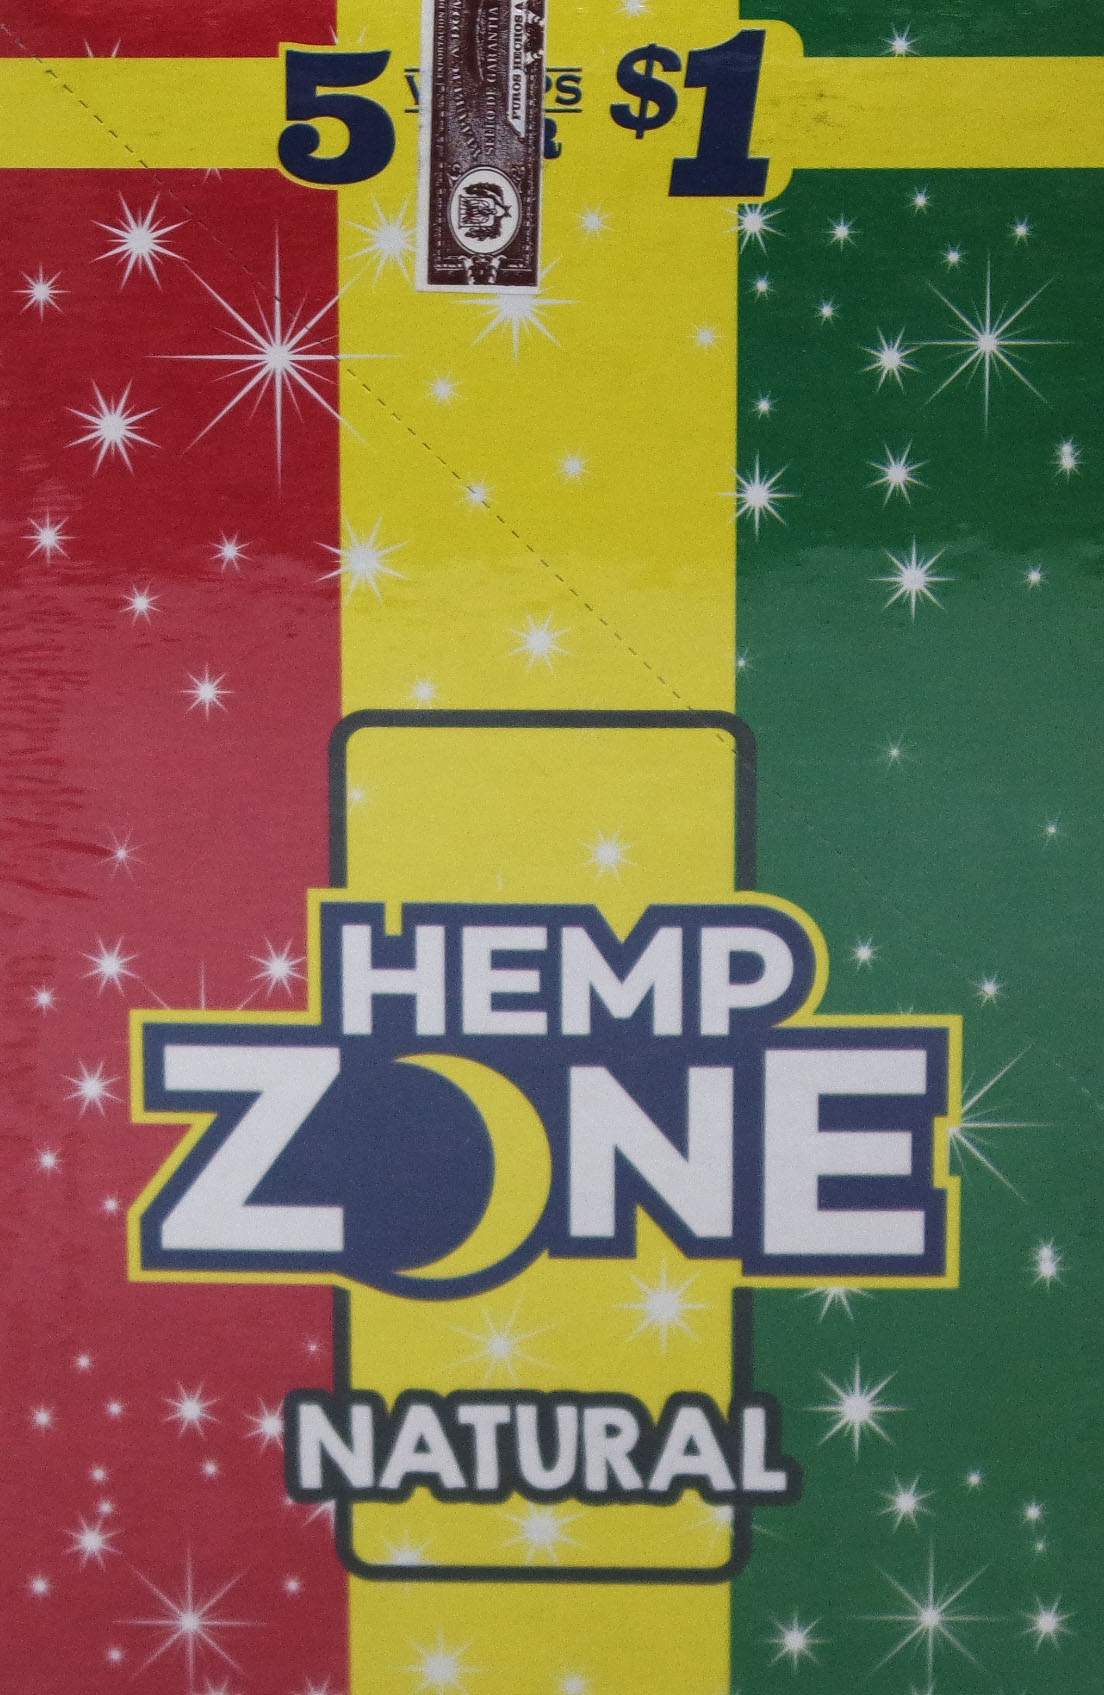 Hemp zone natural wraps 5/$1 15/5pk